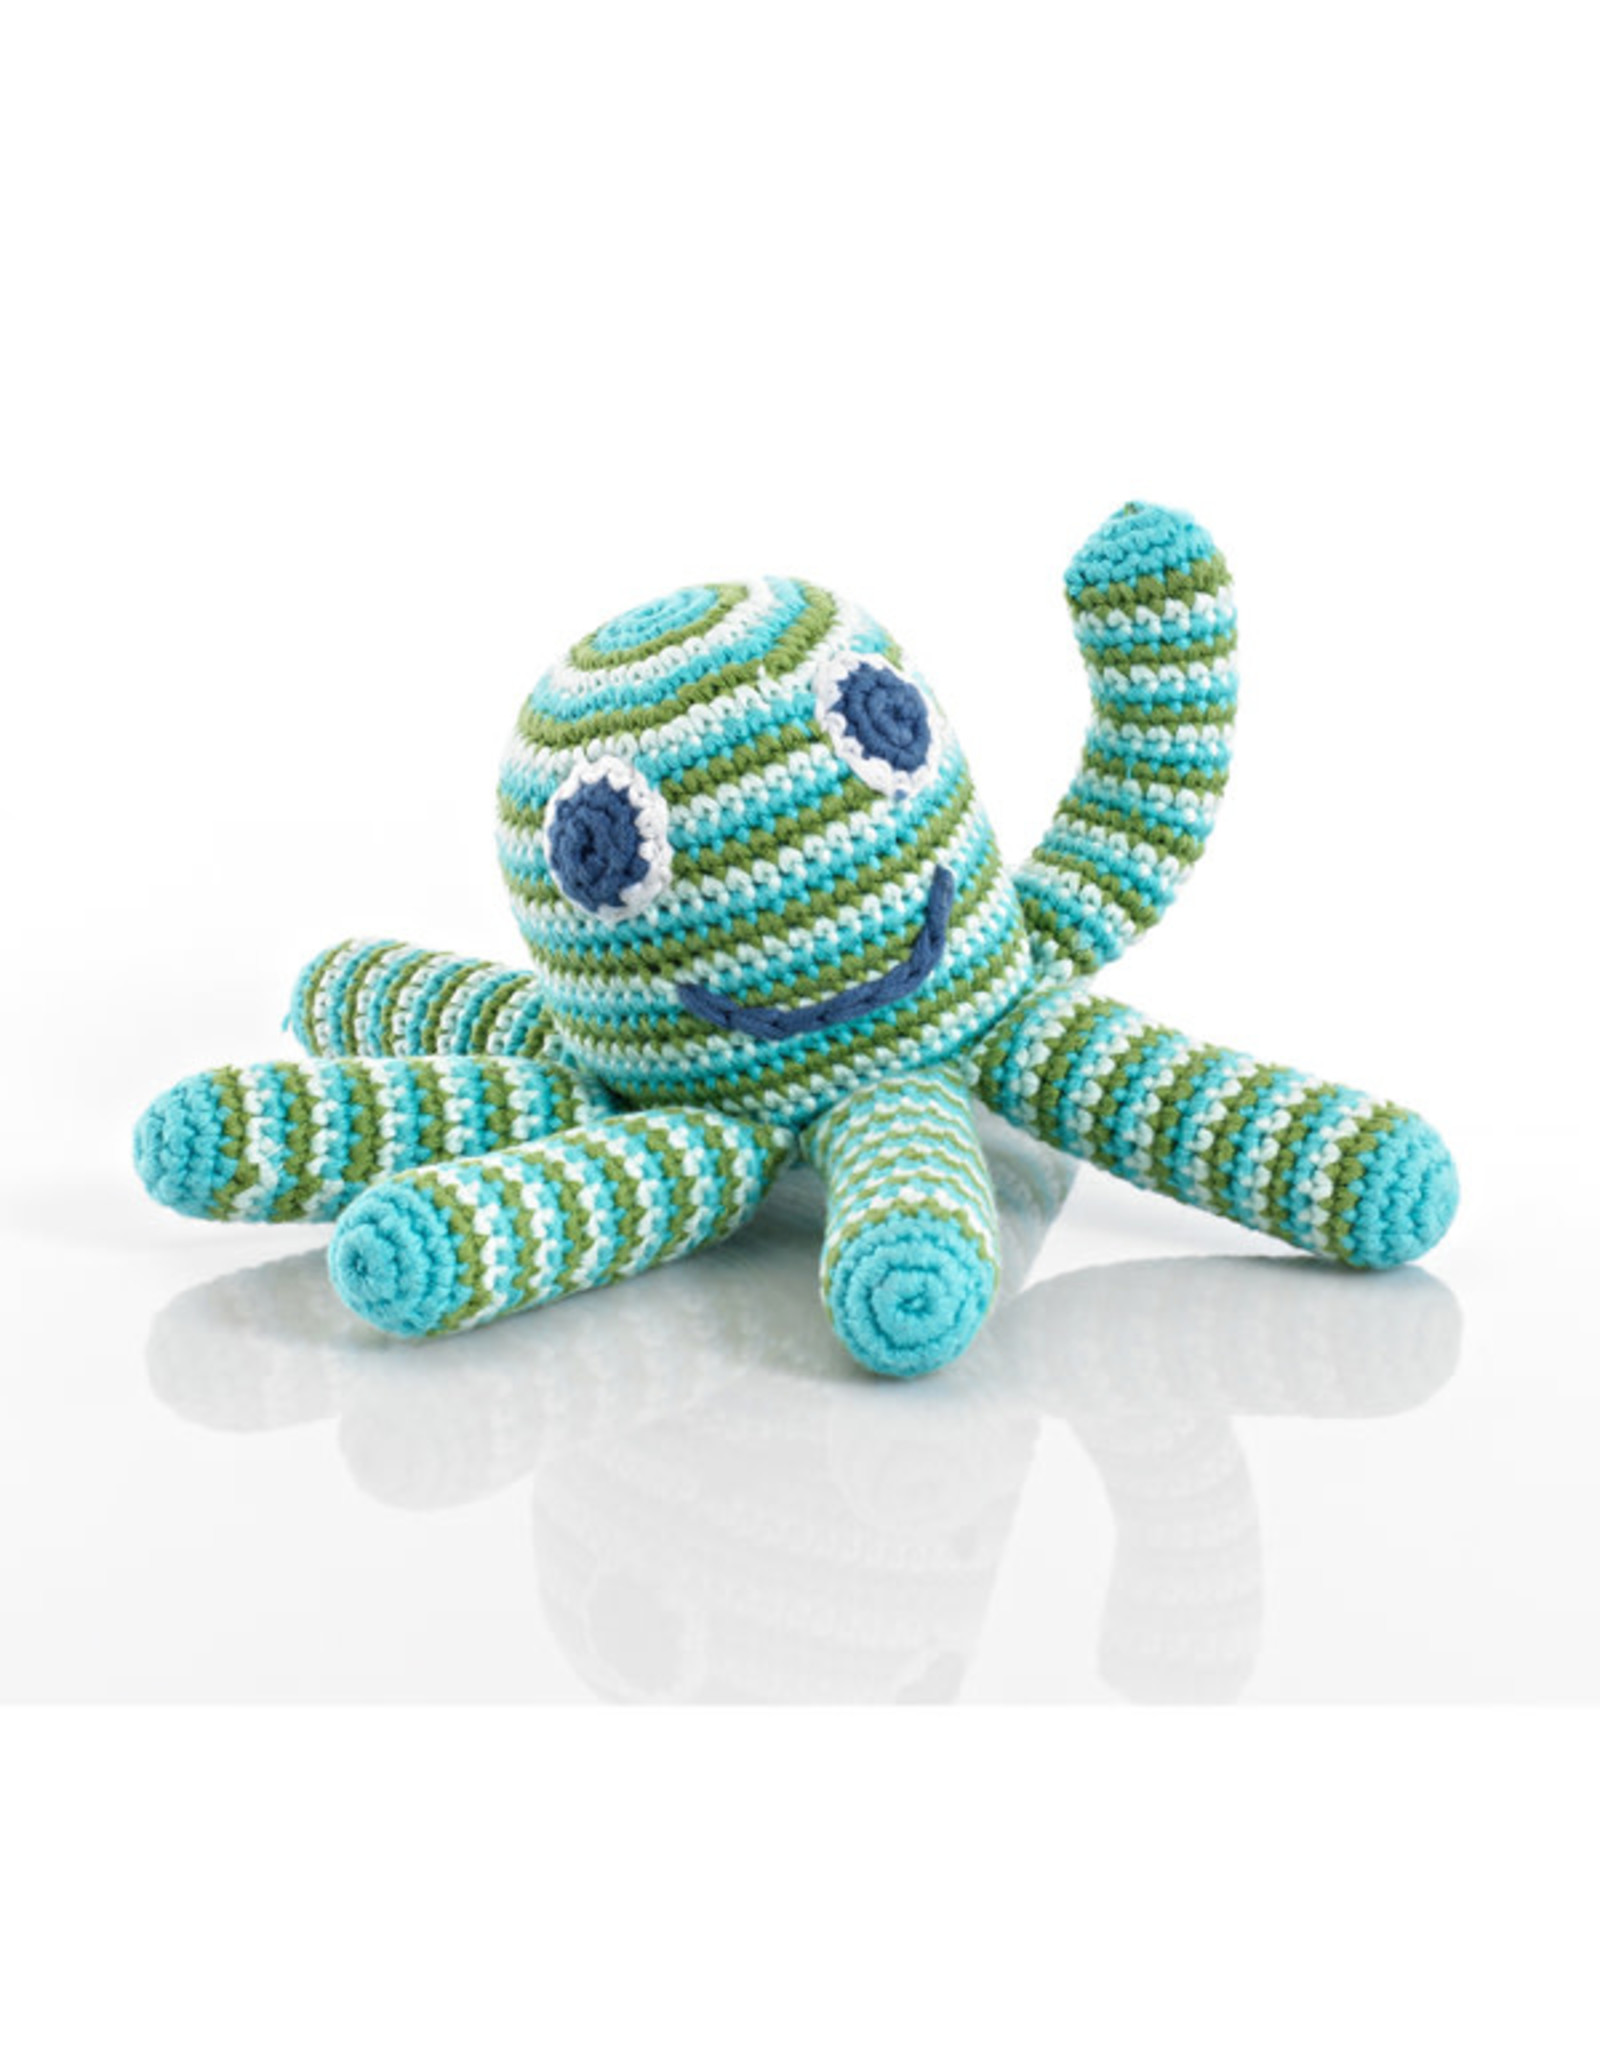 Trade roots Bangladesh, Crocheted Rattles